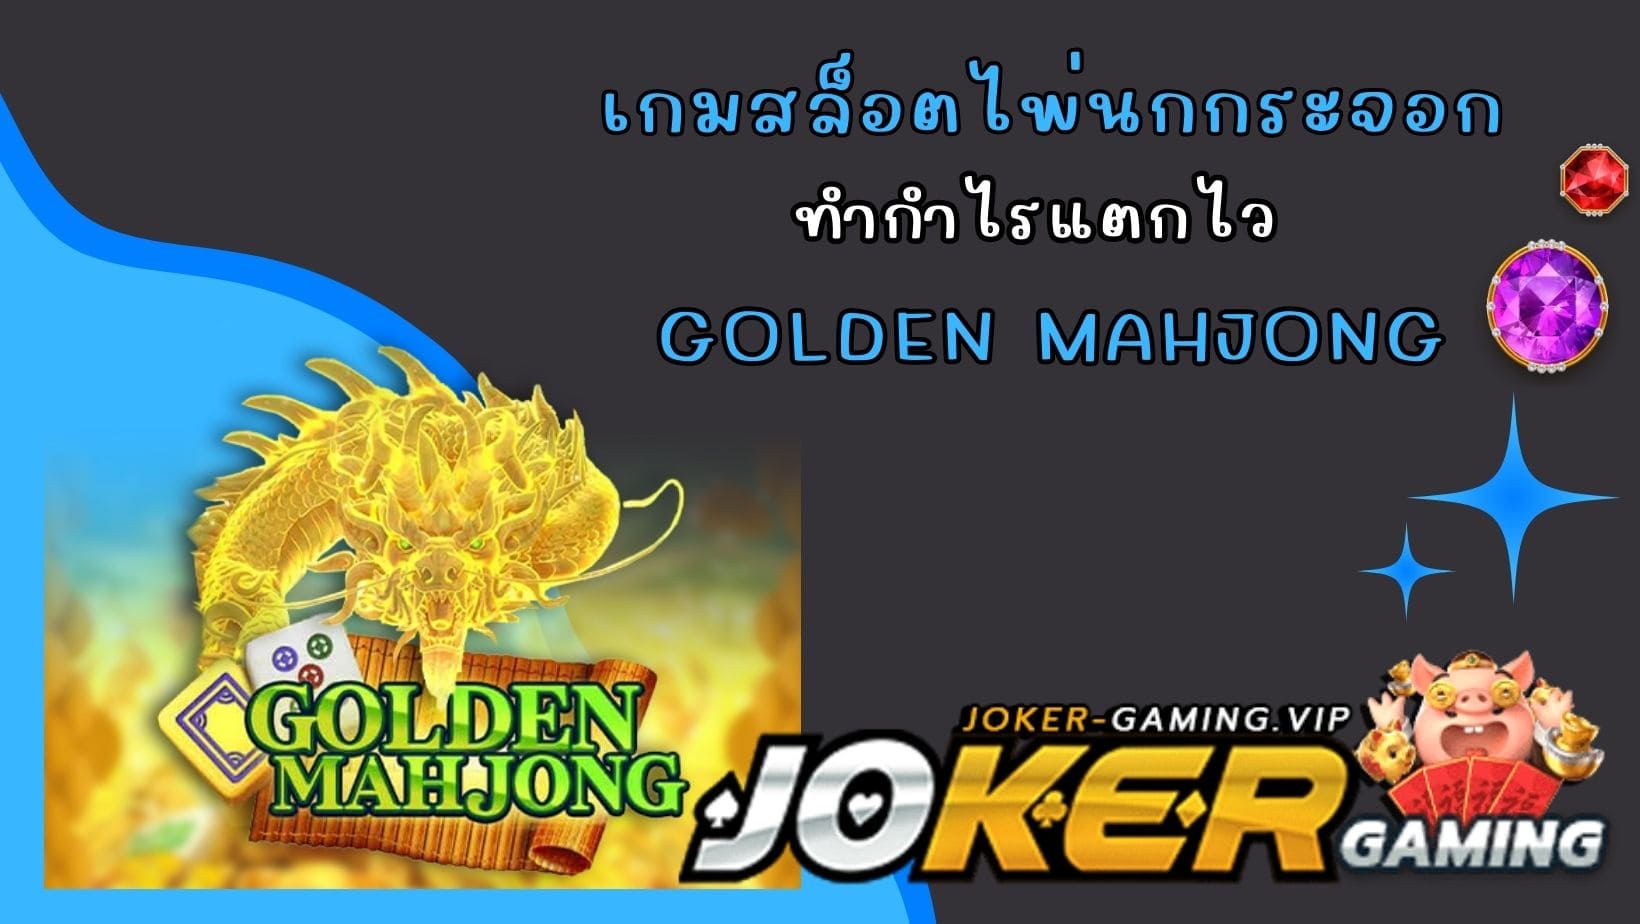 Golden Mahjong เกมสล็อตไพ่นกกระจอก